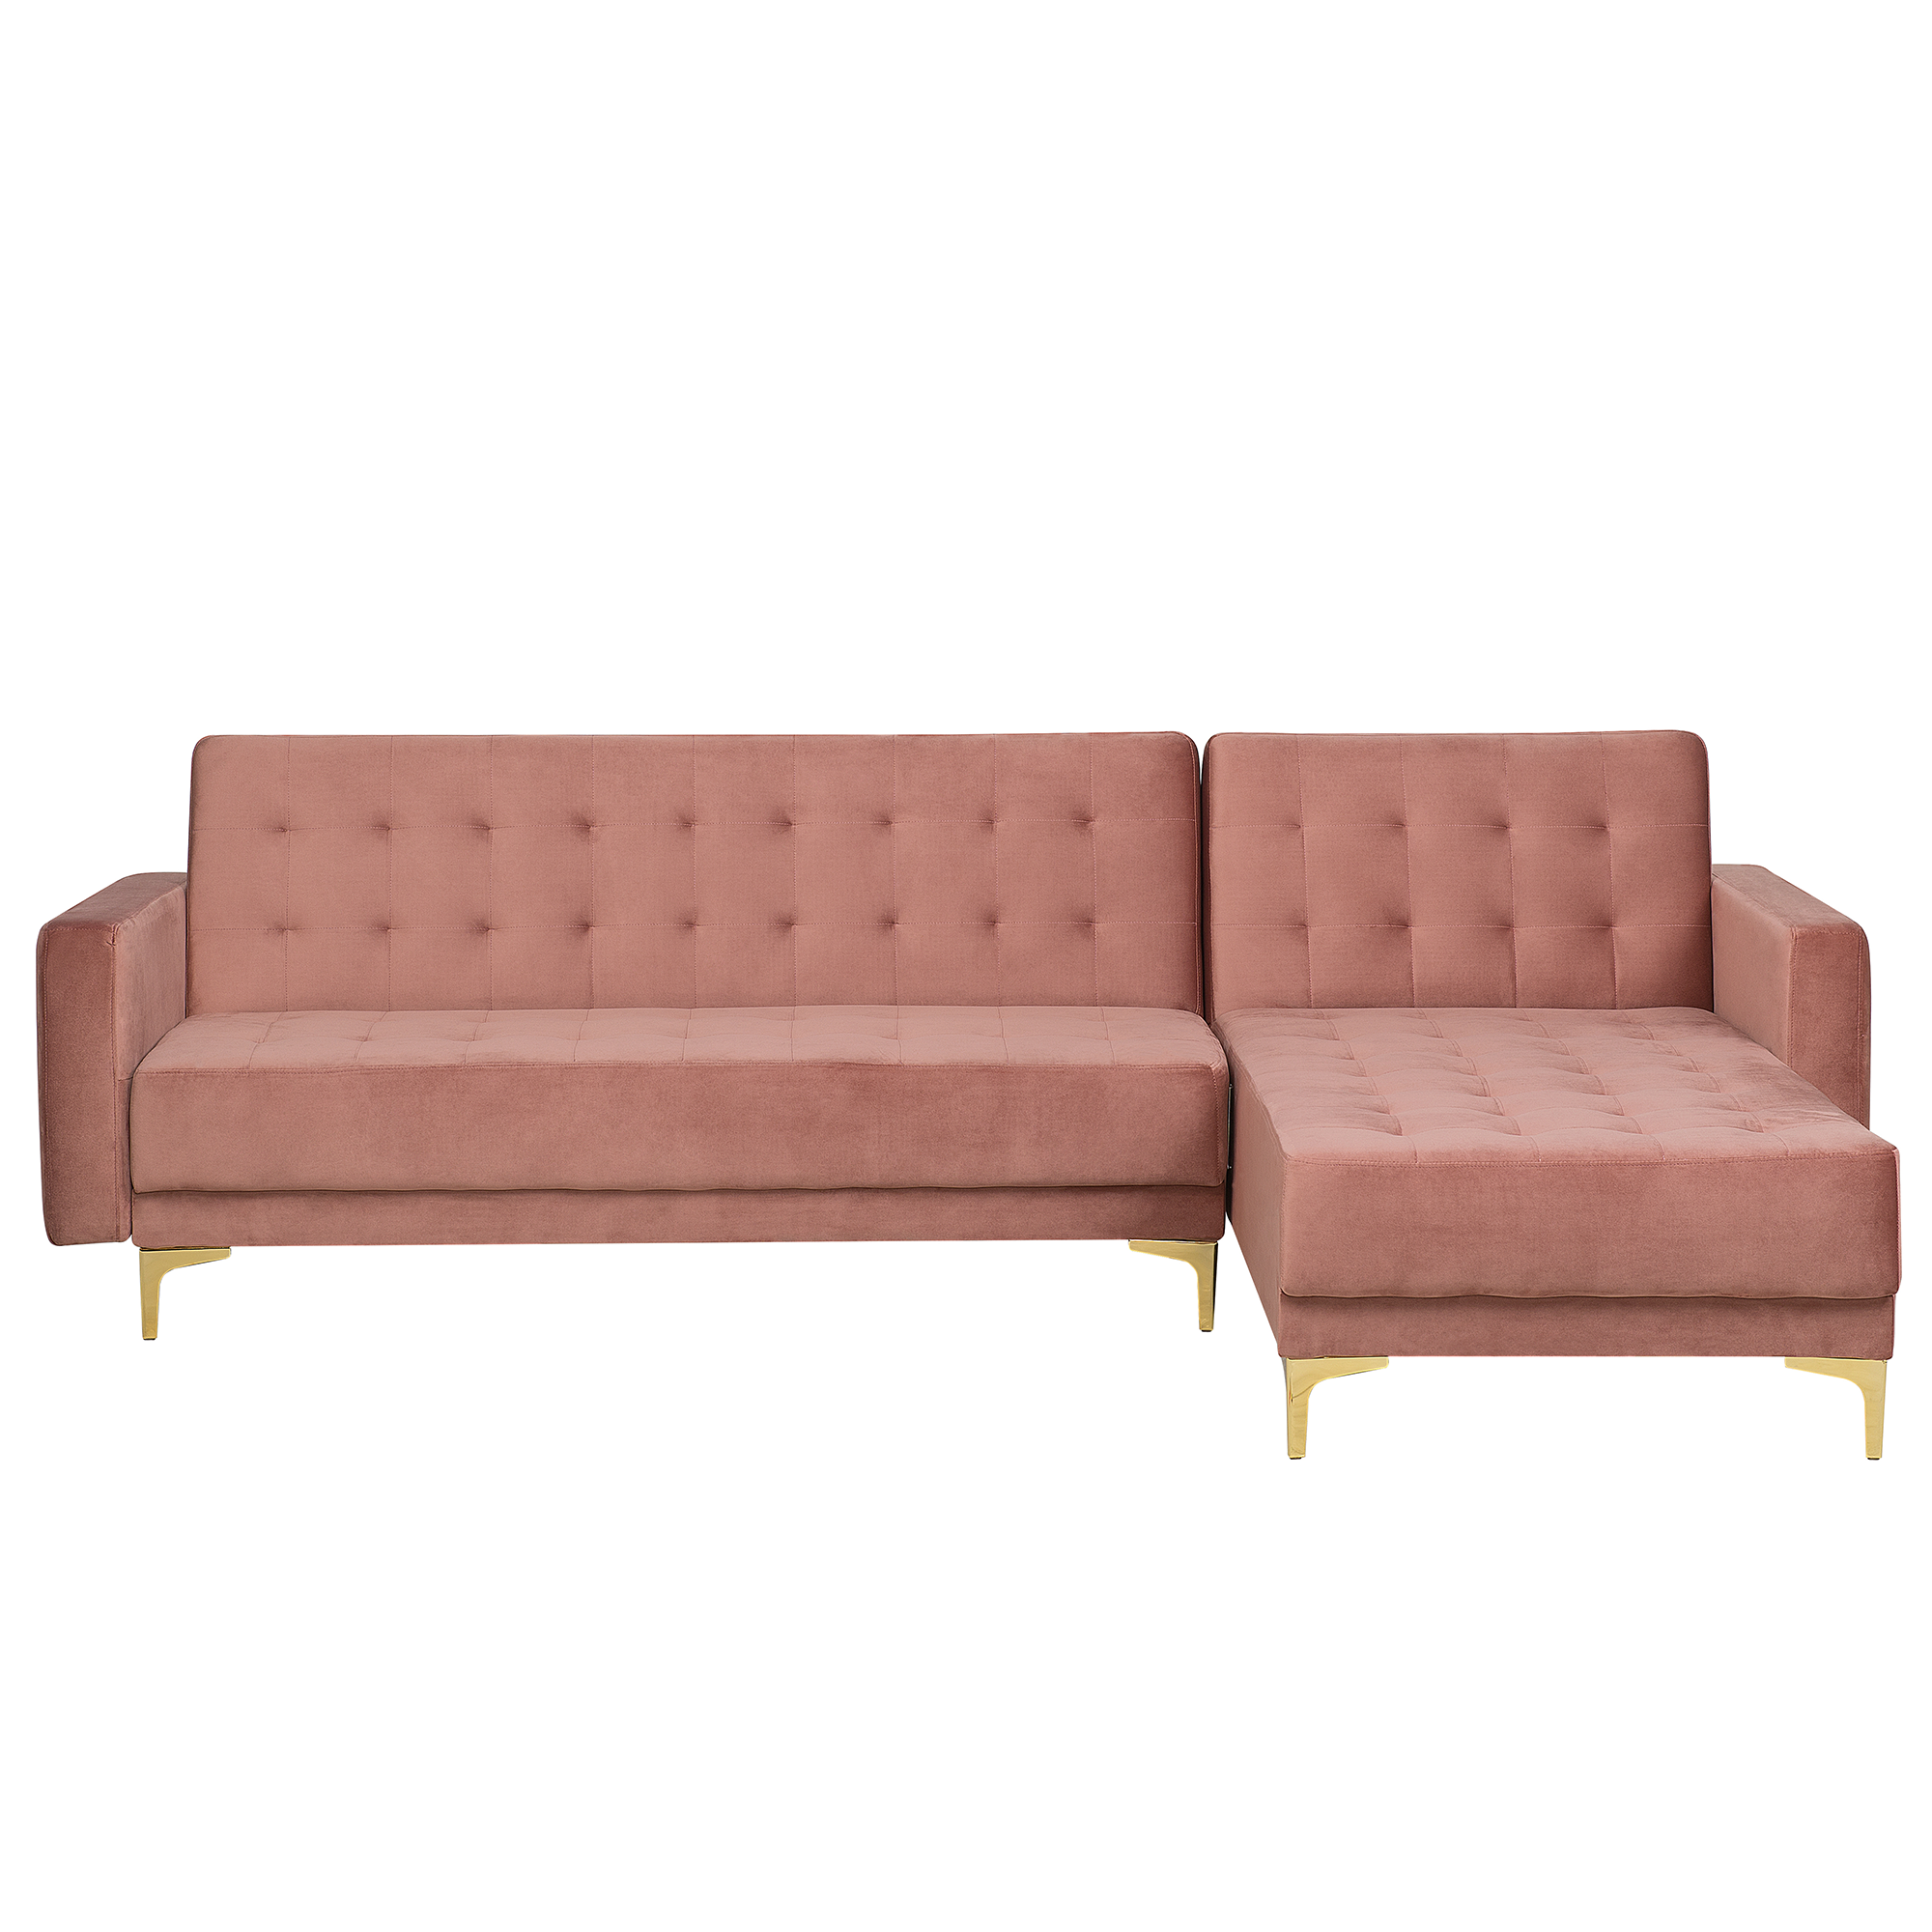 Beliani Corner Sofa Bed Pink Velvet Tufted Fabric Modern L-Shaped Modular 4 Seater Right Hand Chaise Longue